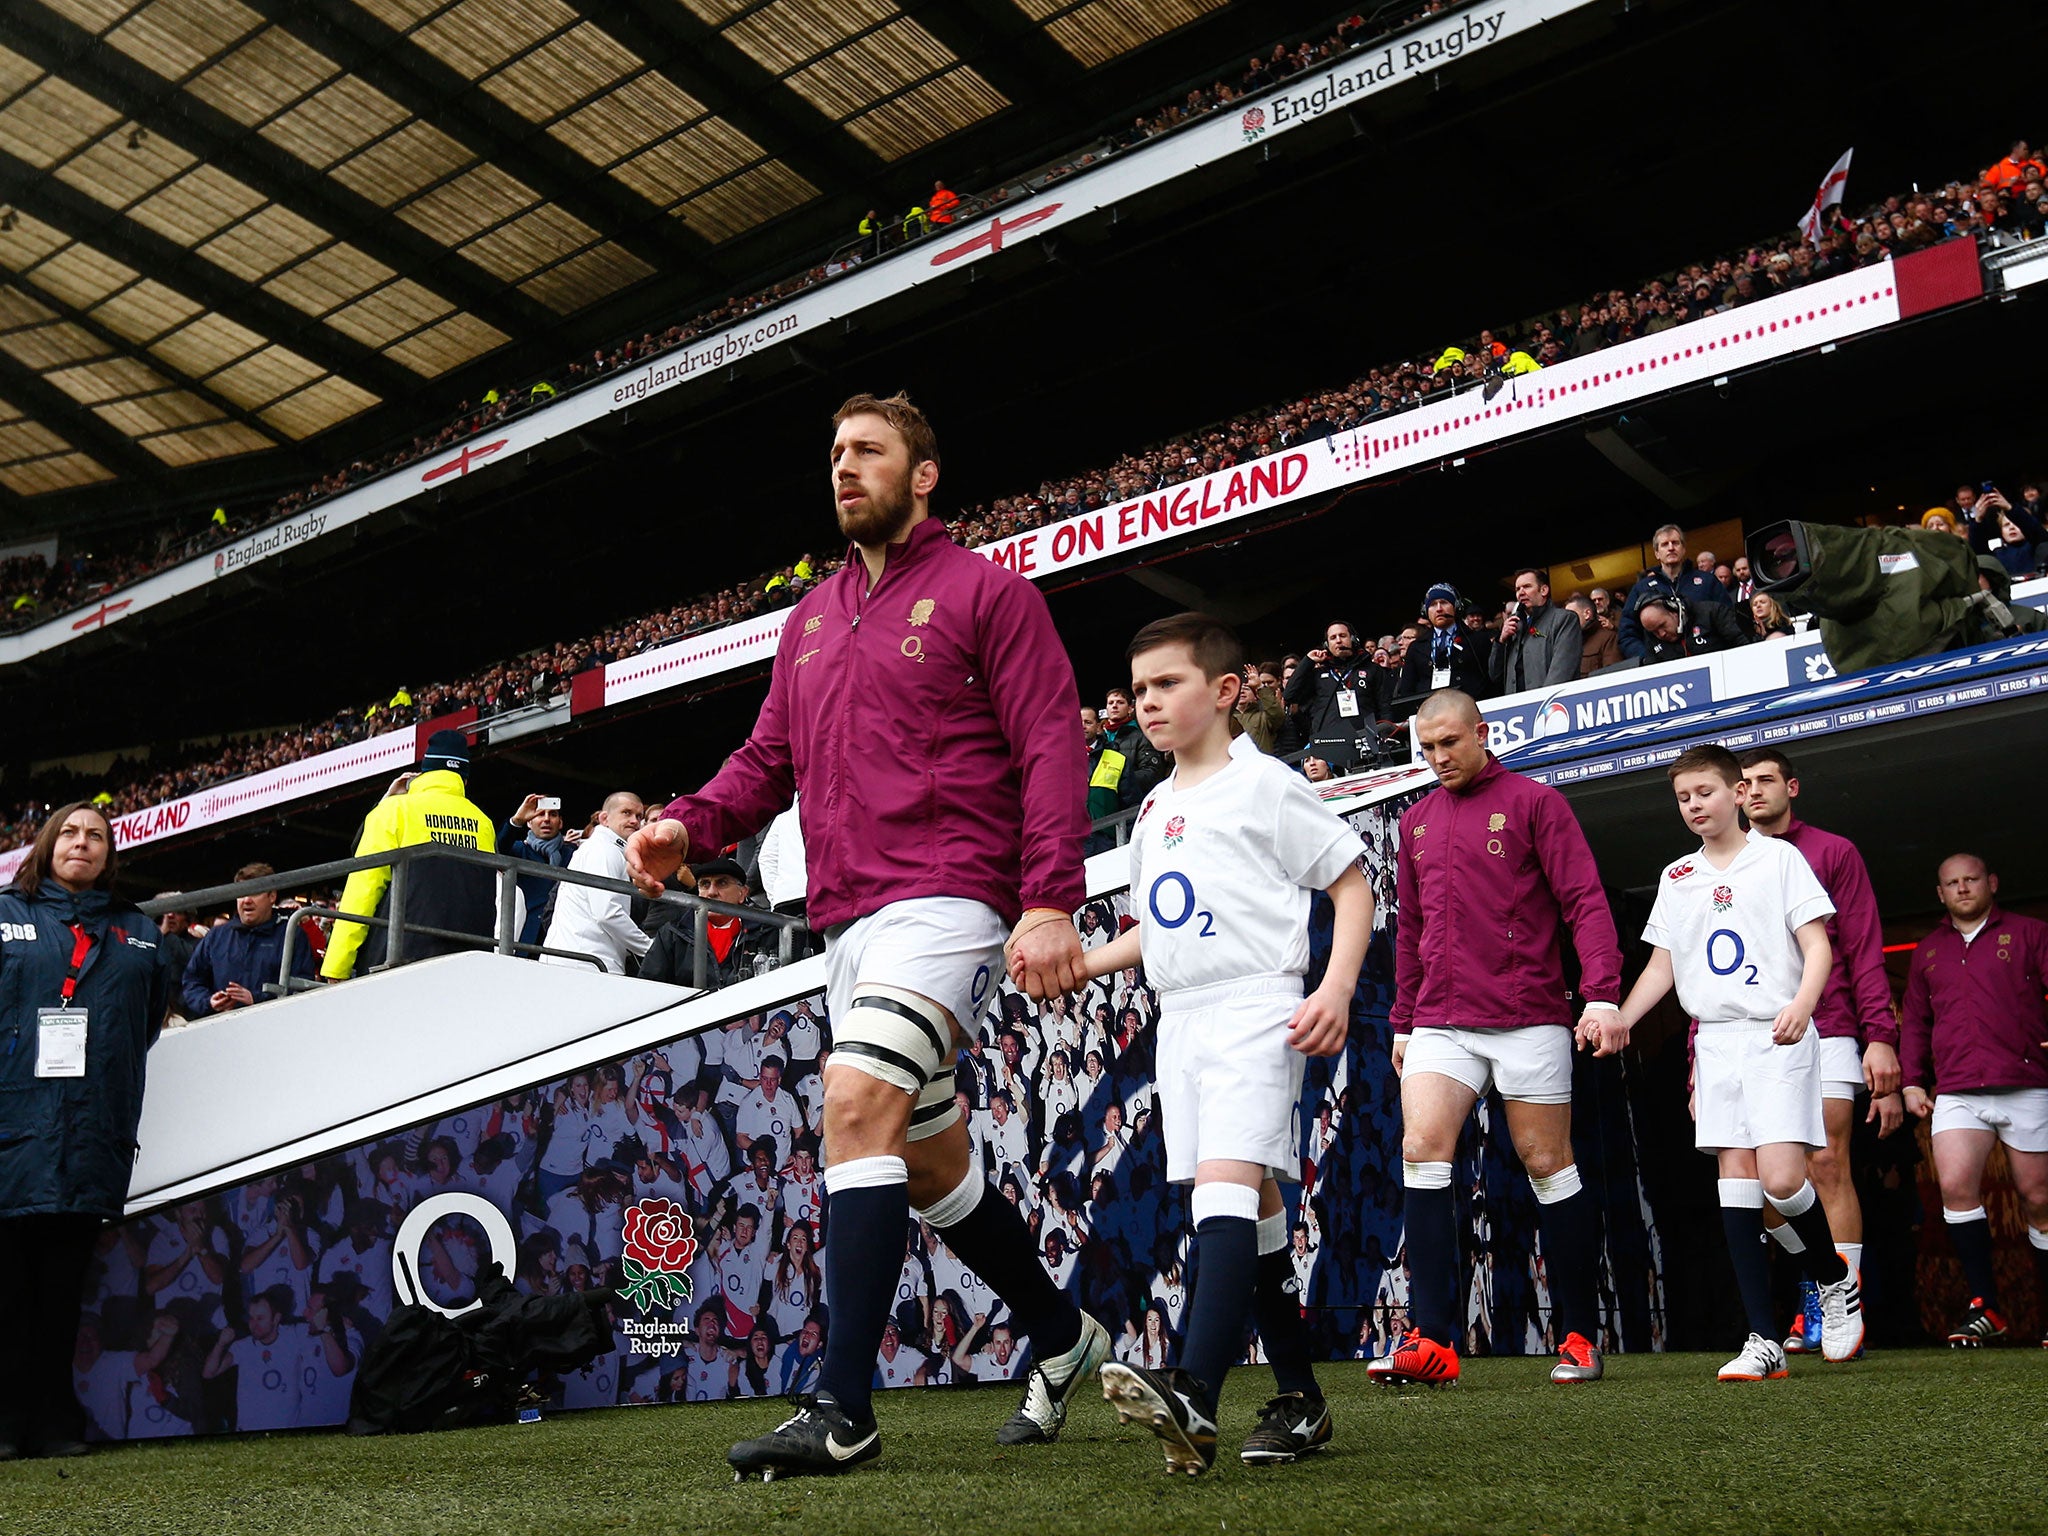 Harry Westlake walks out alongside England captain Chris Robshaw at Twickenham Stadium